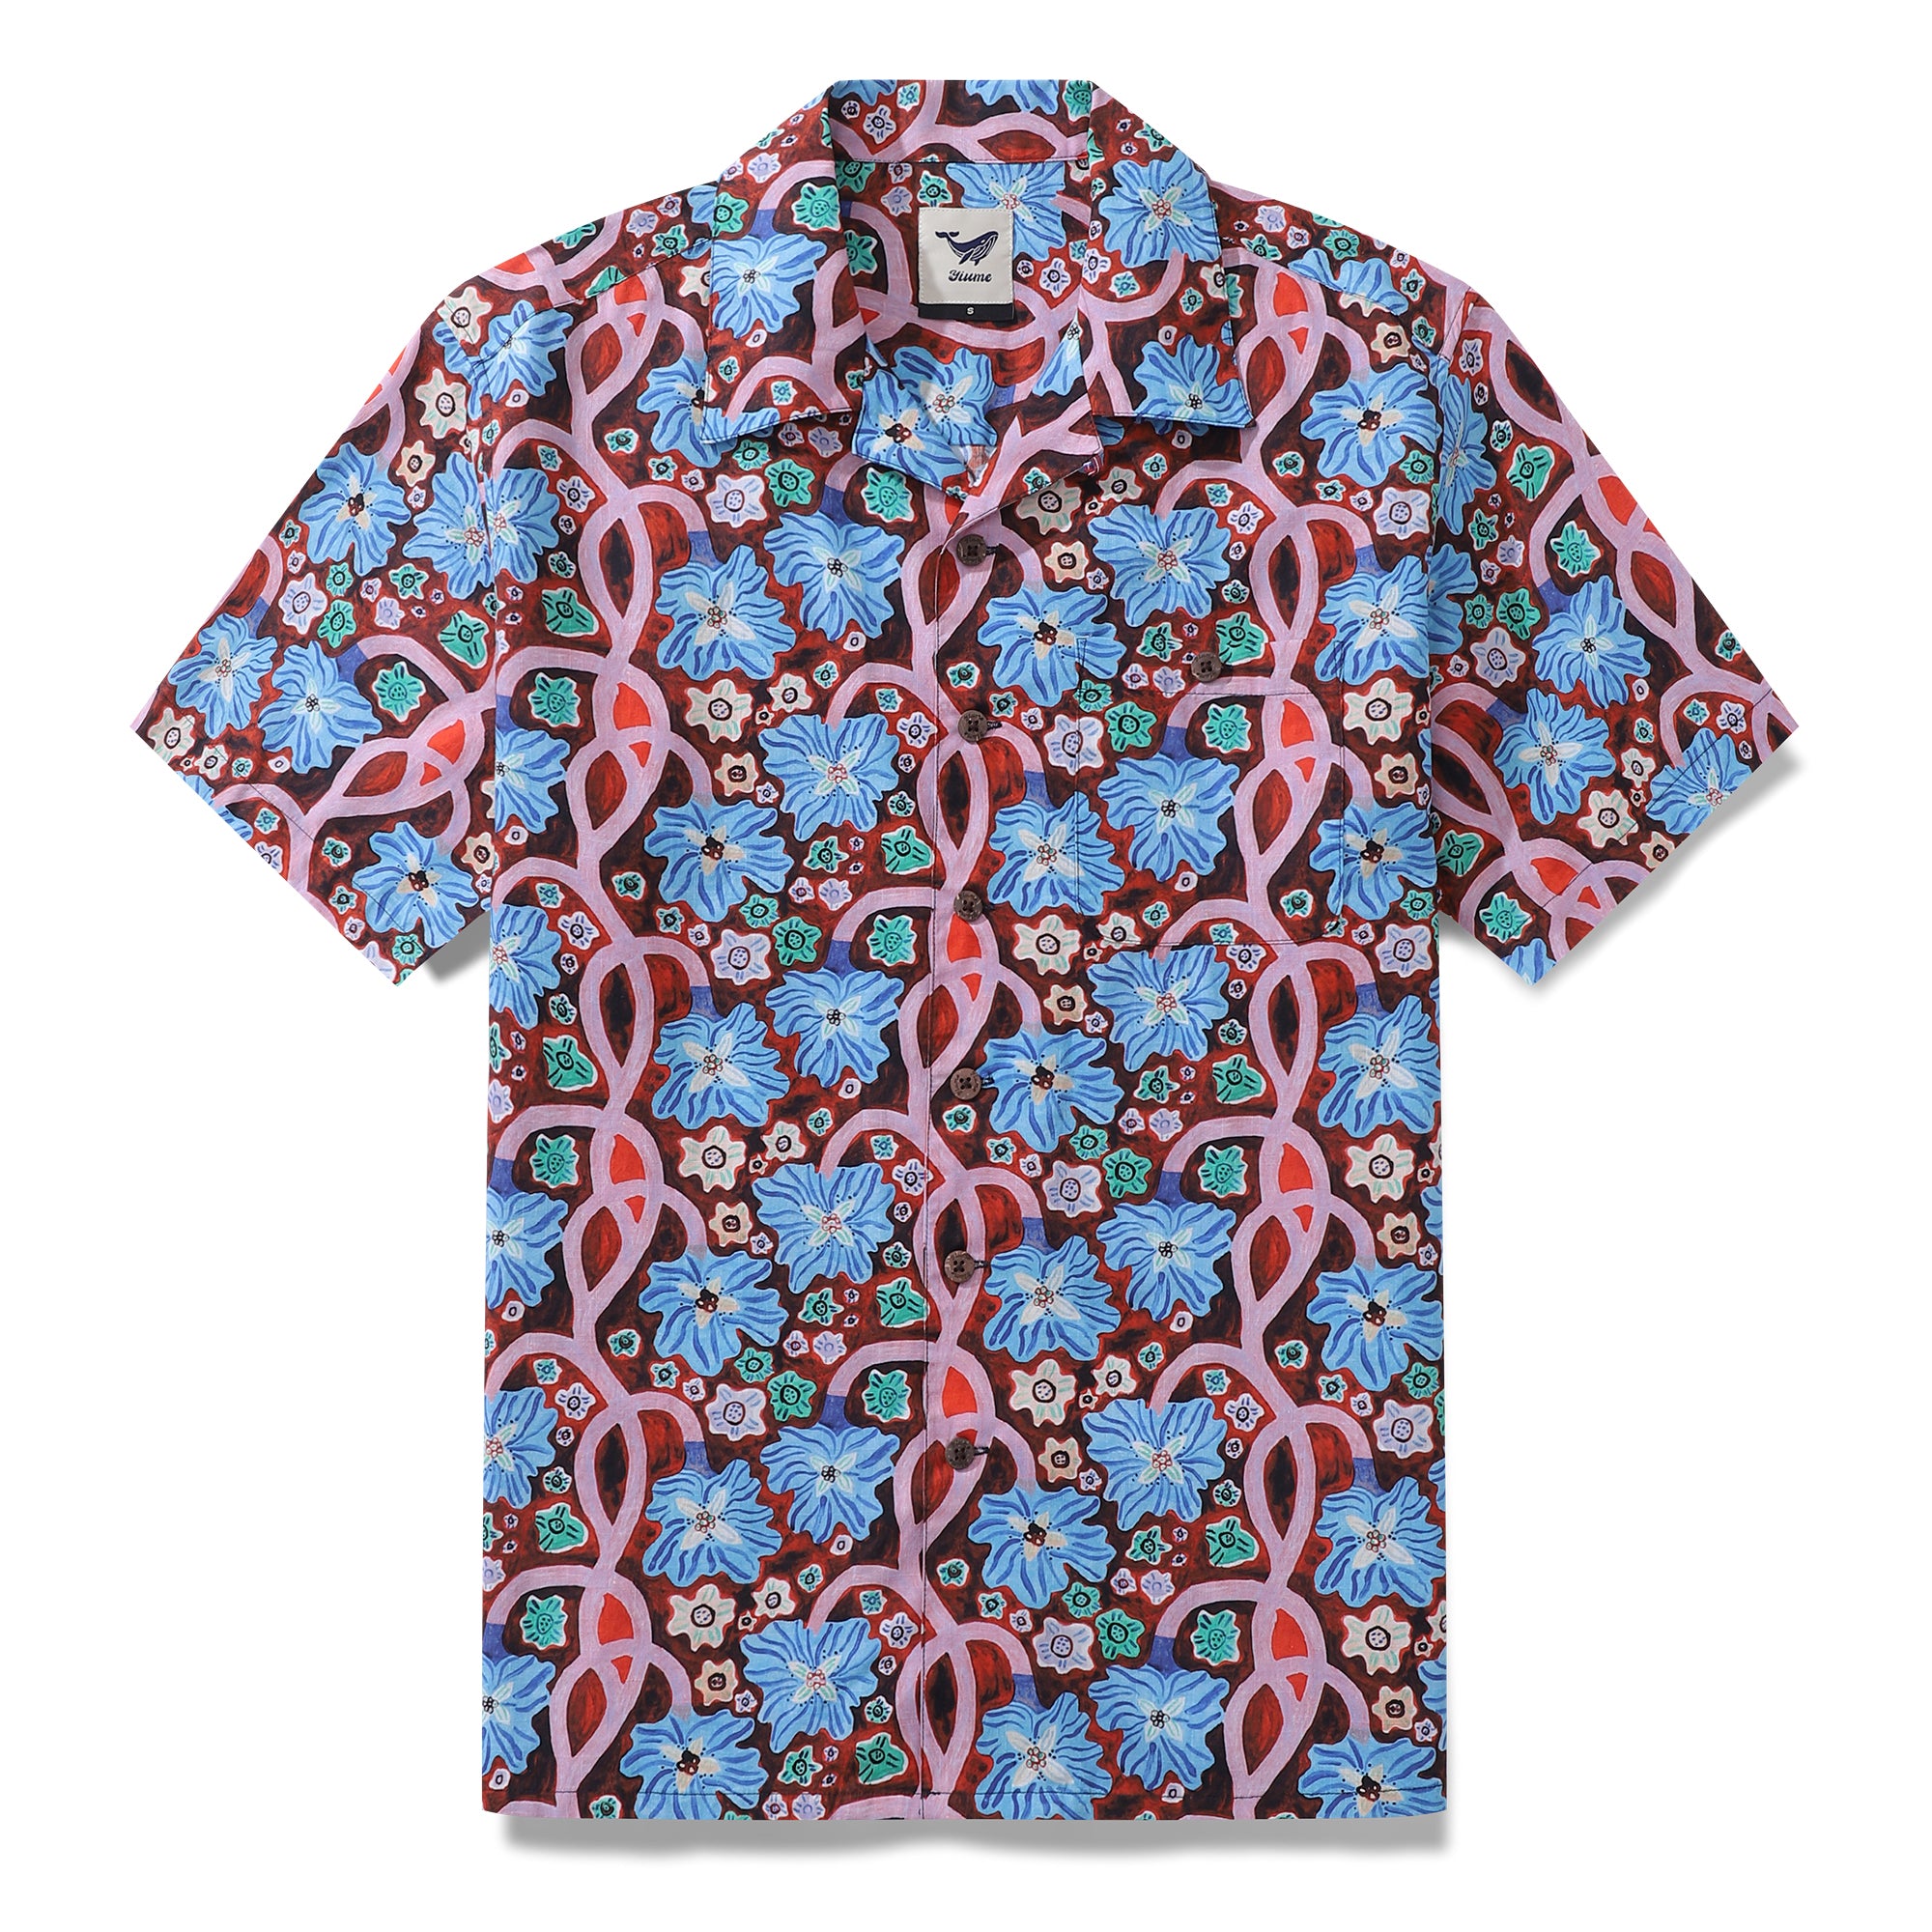 1940s Vintage Hawaiian Shirt For Men Midnight Garden Shirt Camp Collar 100% Cotton